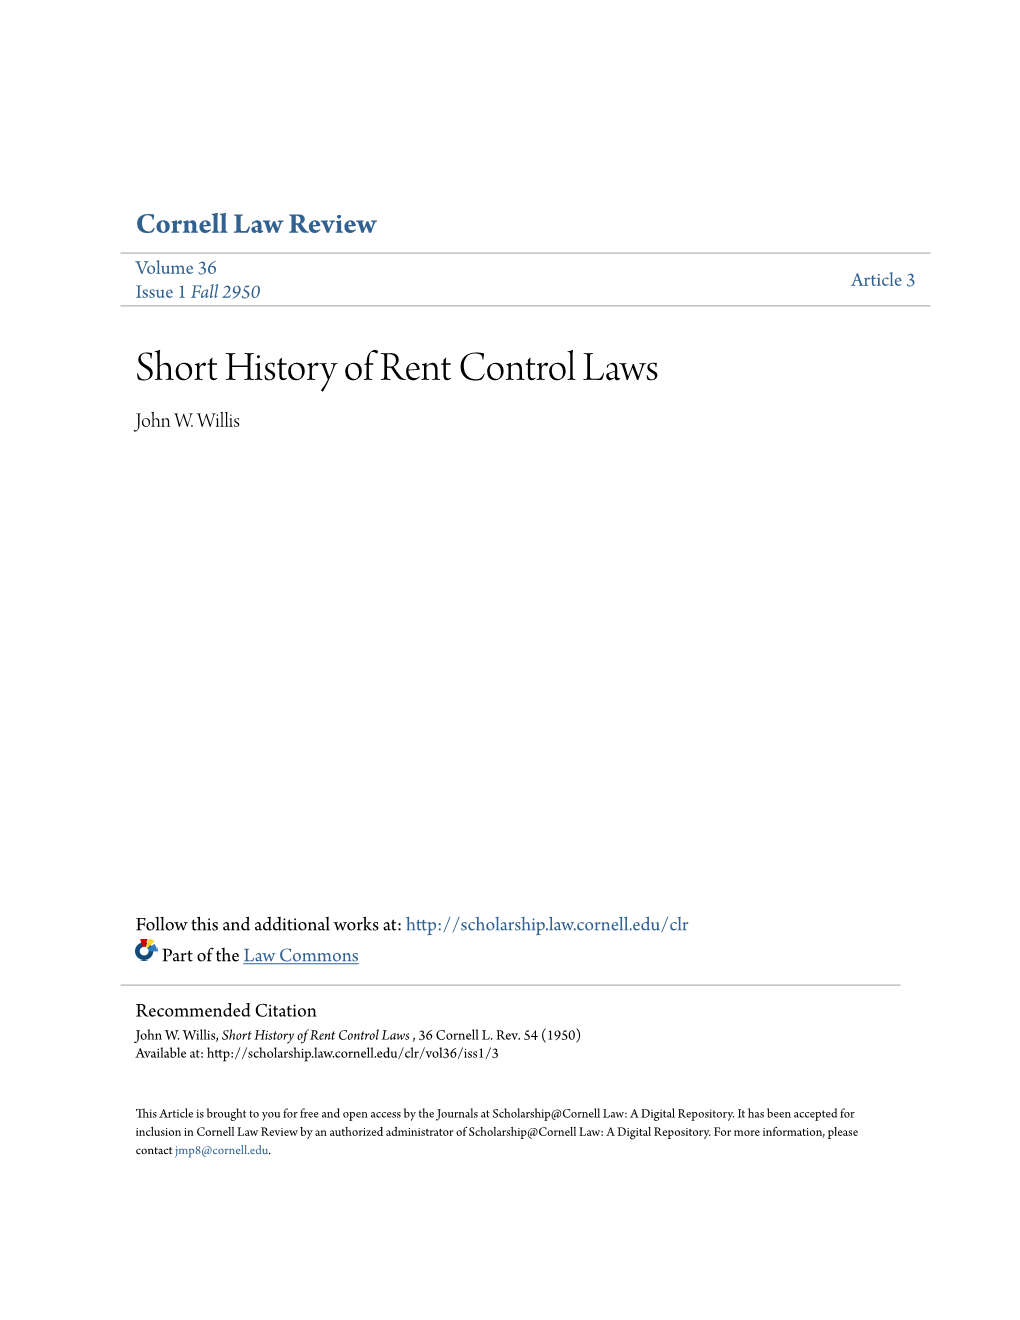 Short History of Rent Control Laws John W